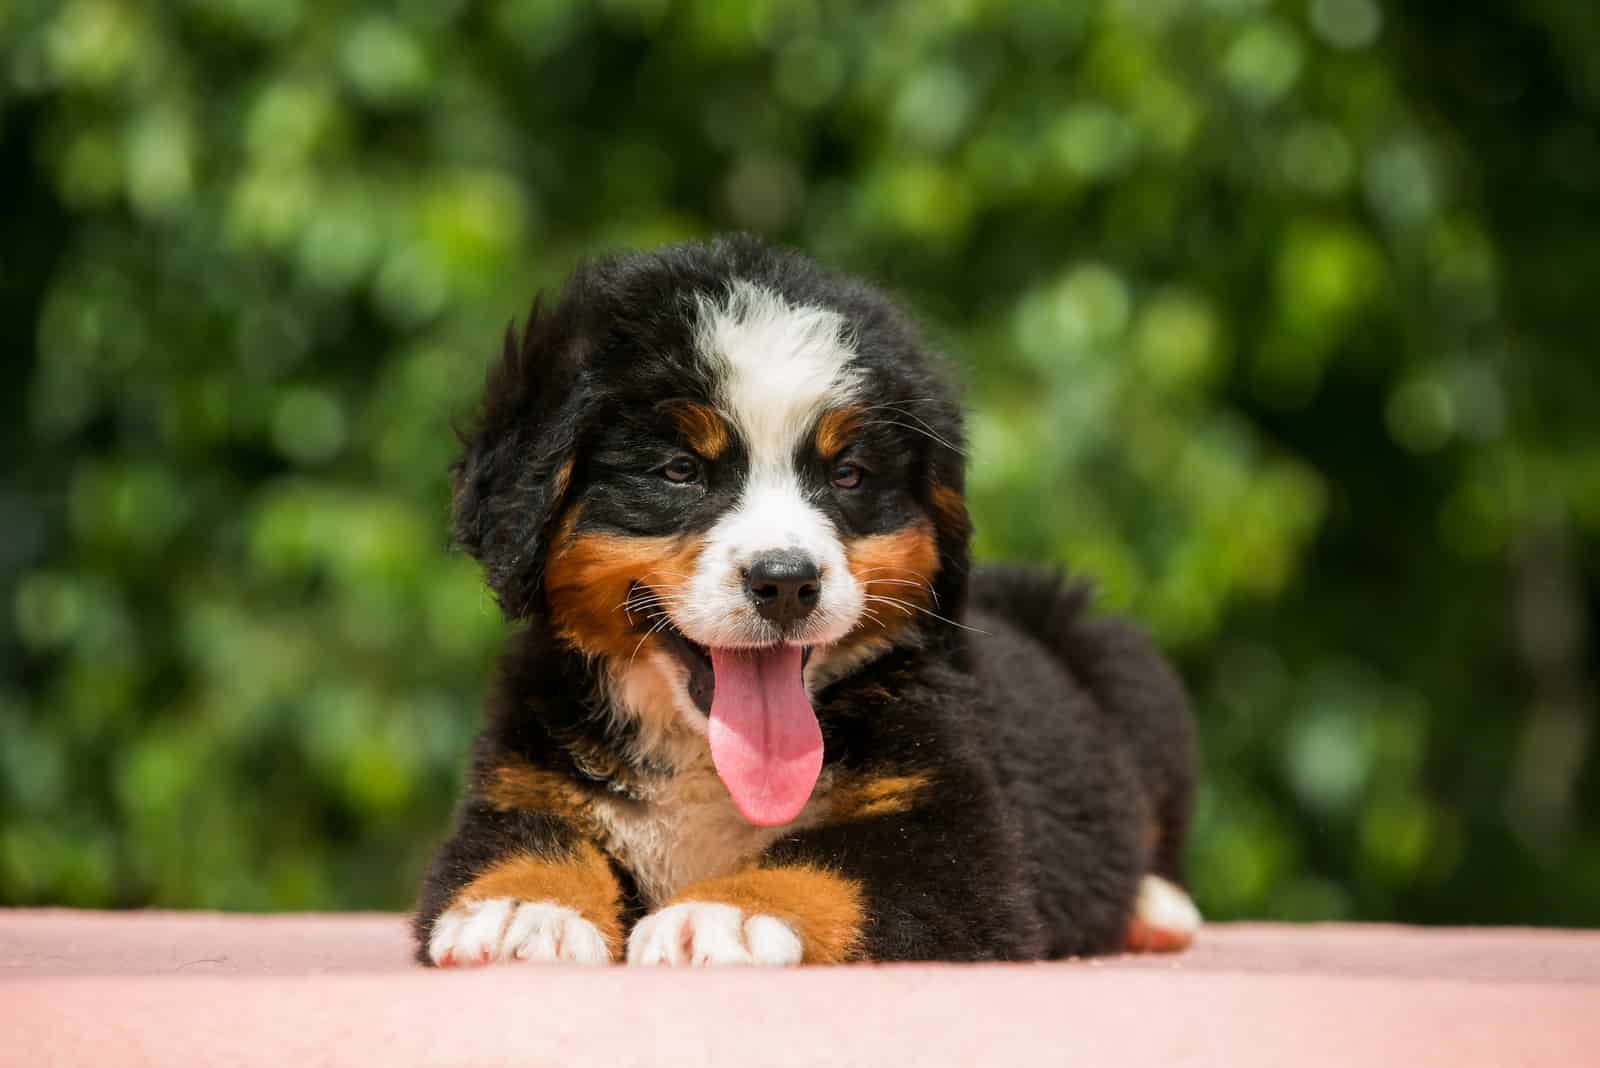 cute bernese mountain dog puppy